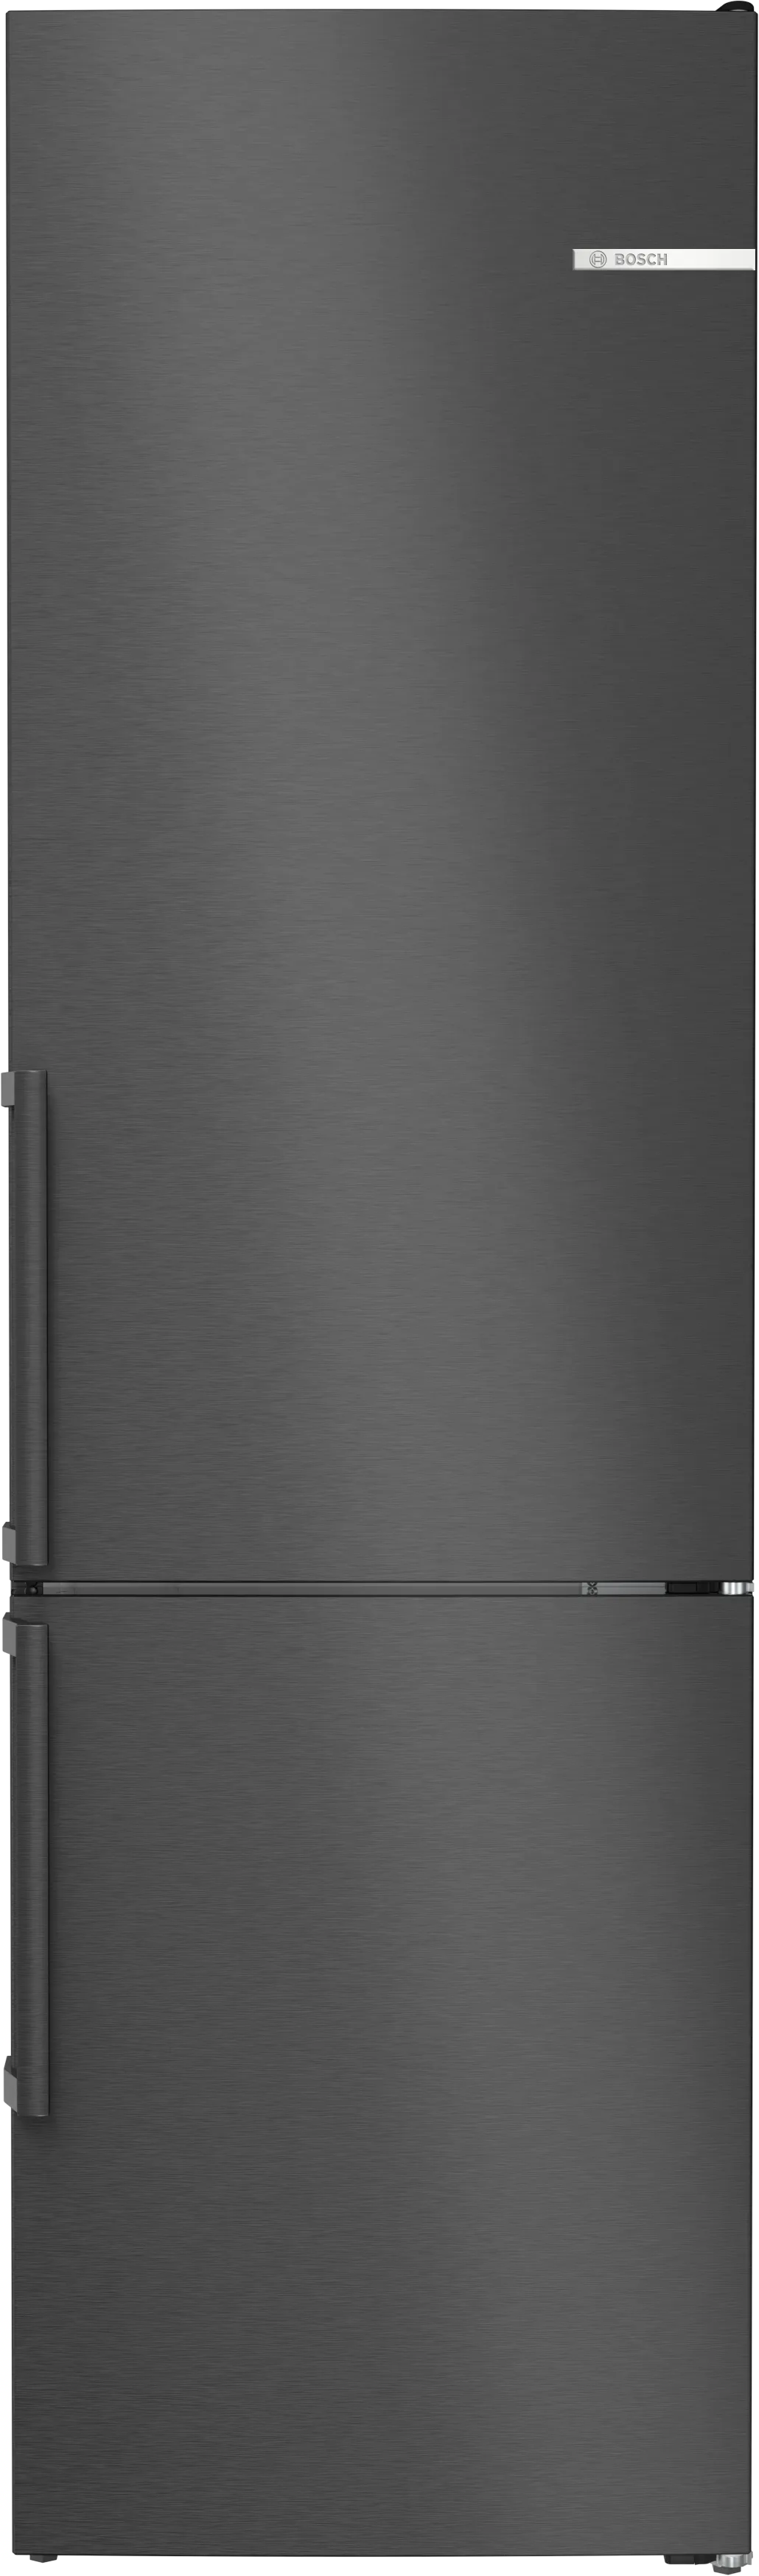 Series 4 free-standing fridge-freezer with freezer at bottom 203 x 60 cm Black stainless steel 